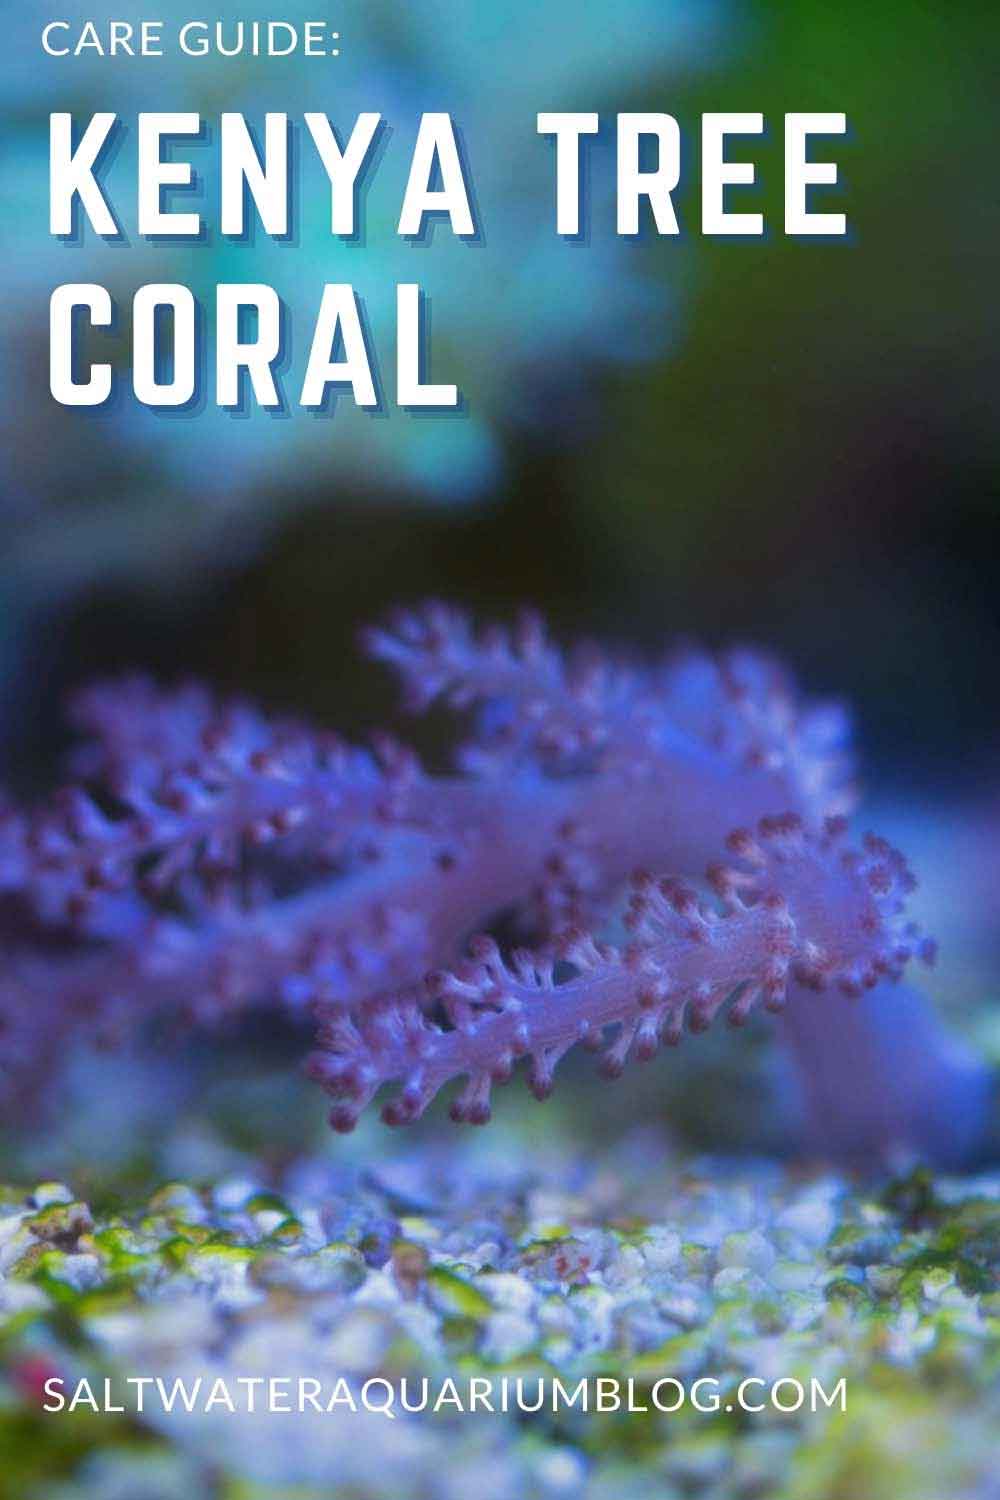 Kenya Tree Coral Care Guide